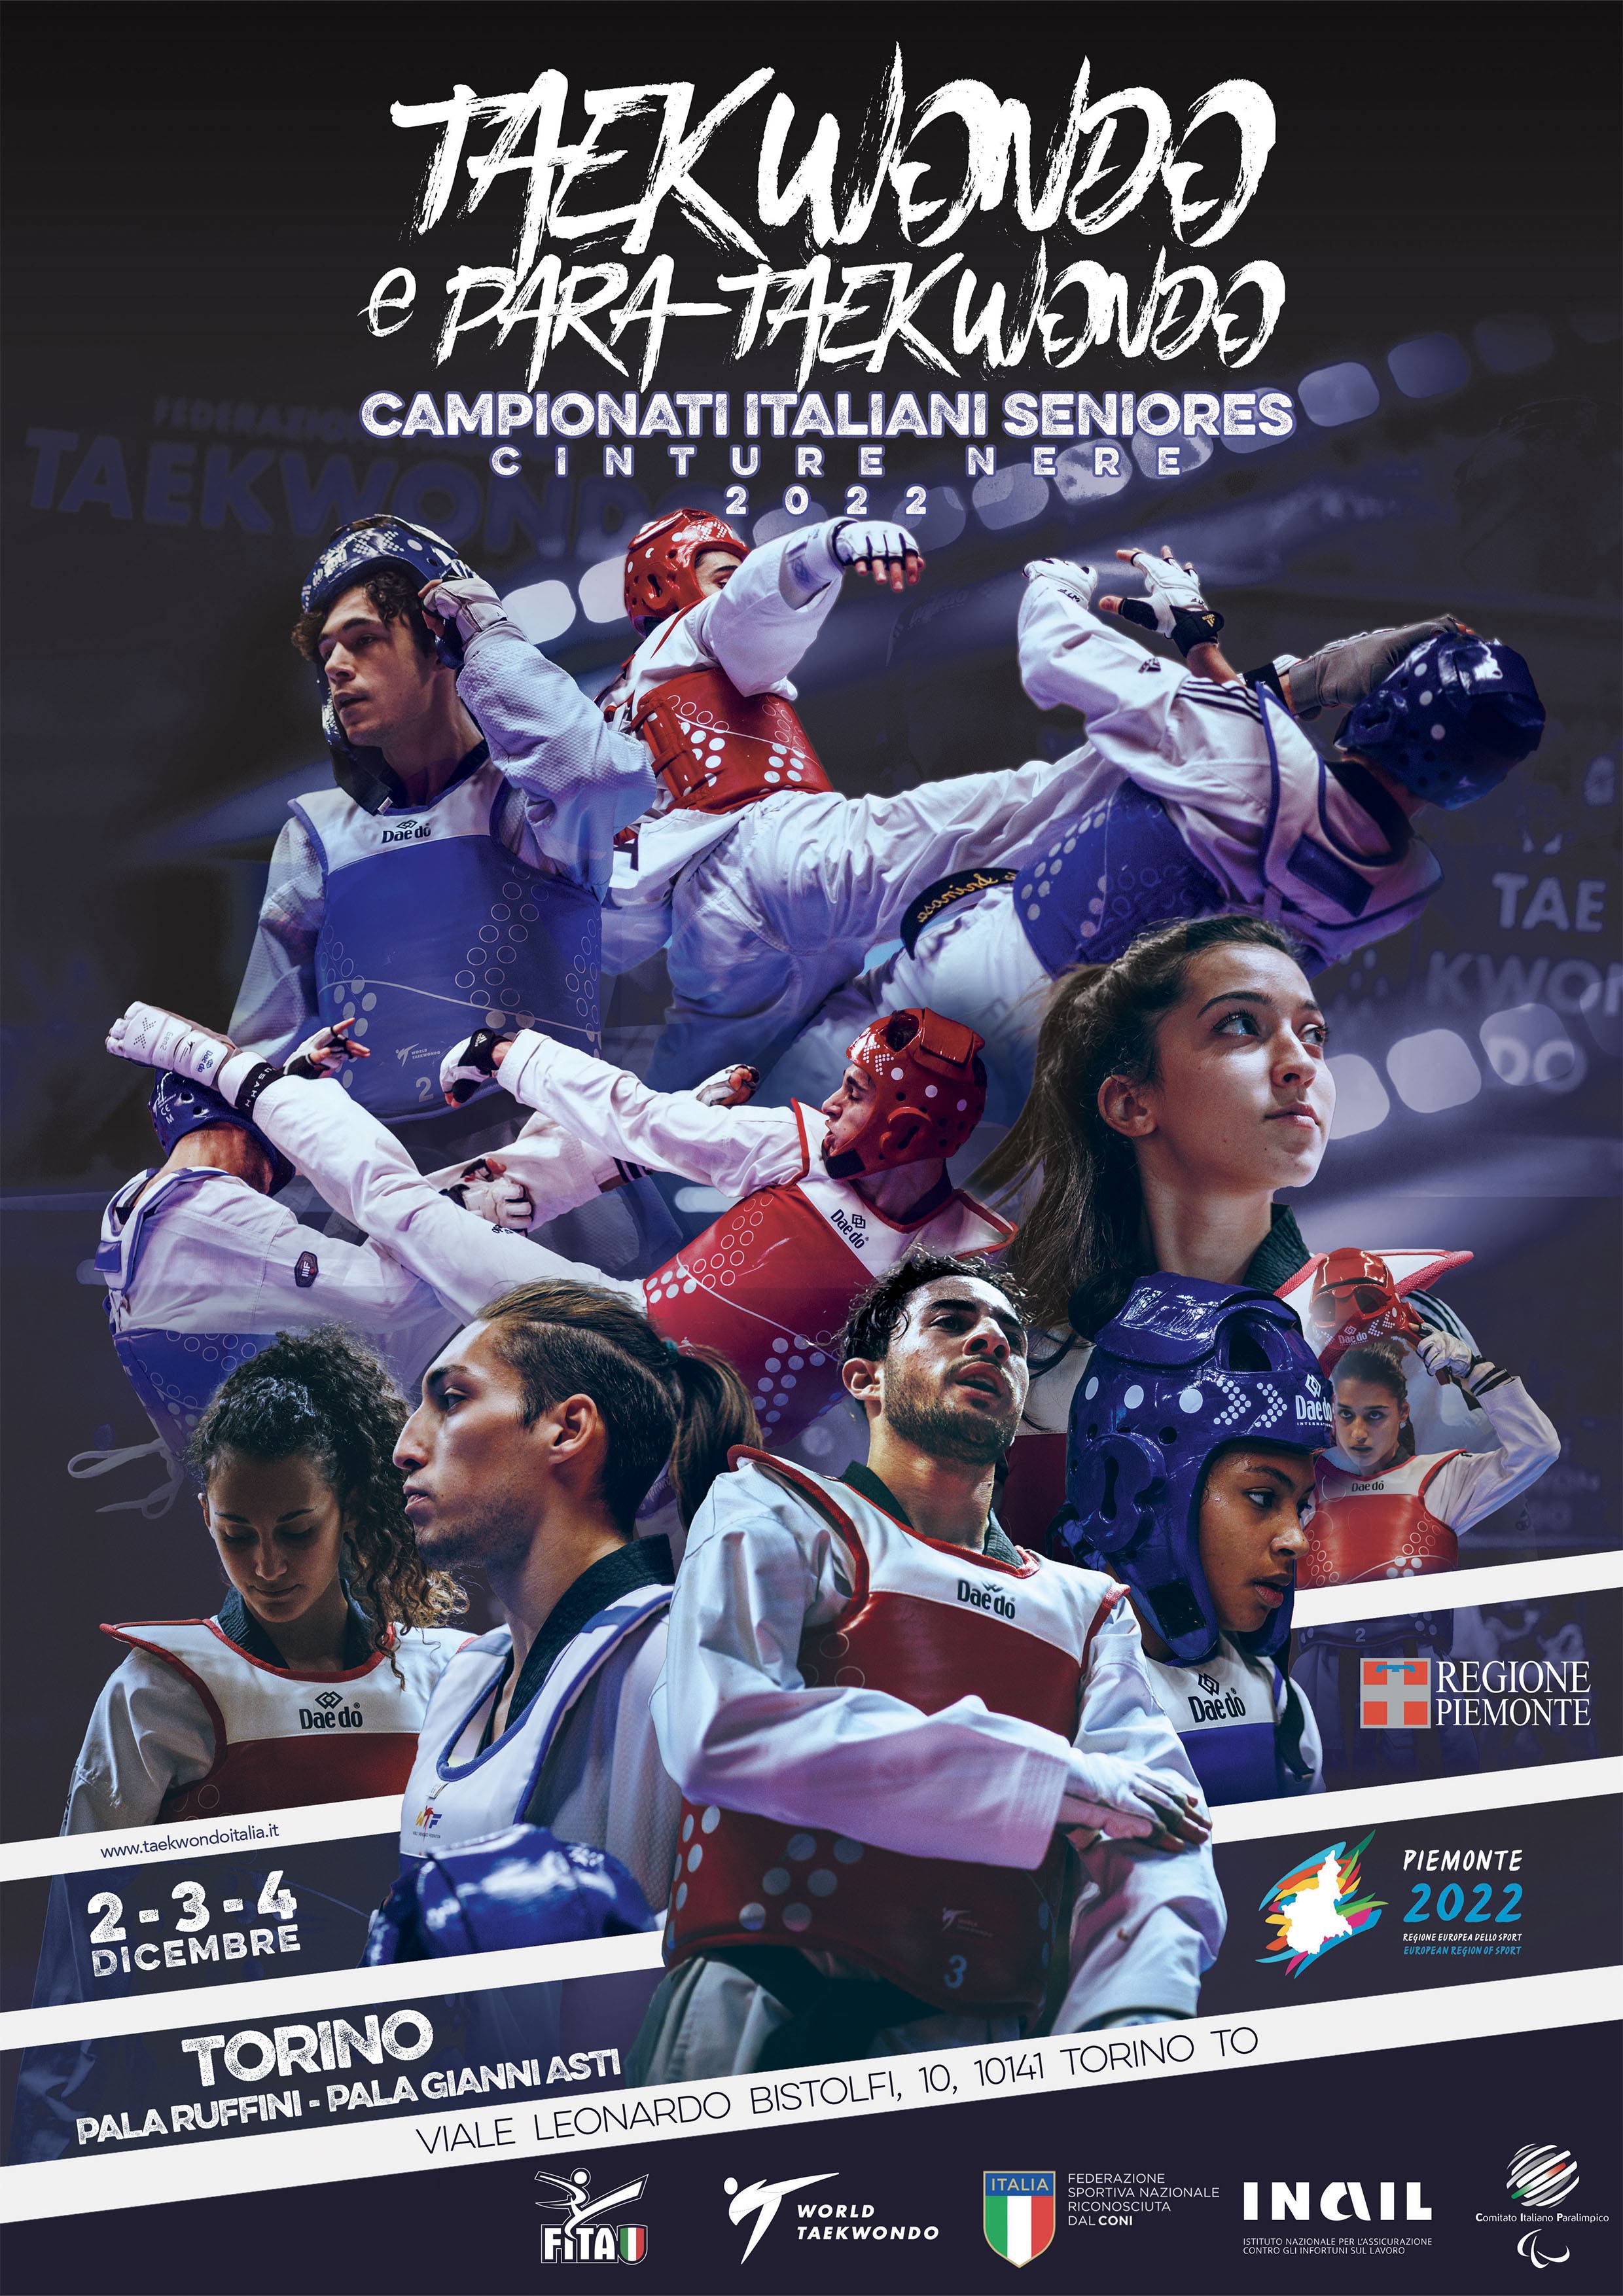 Campionati Italiani Cinture Nere 2022